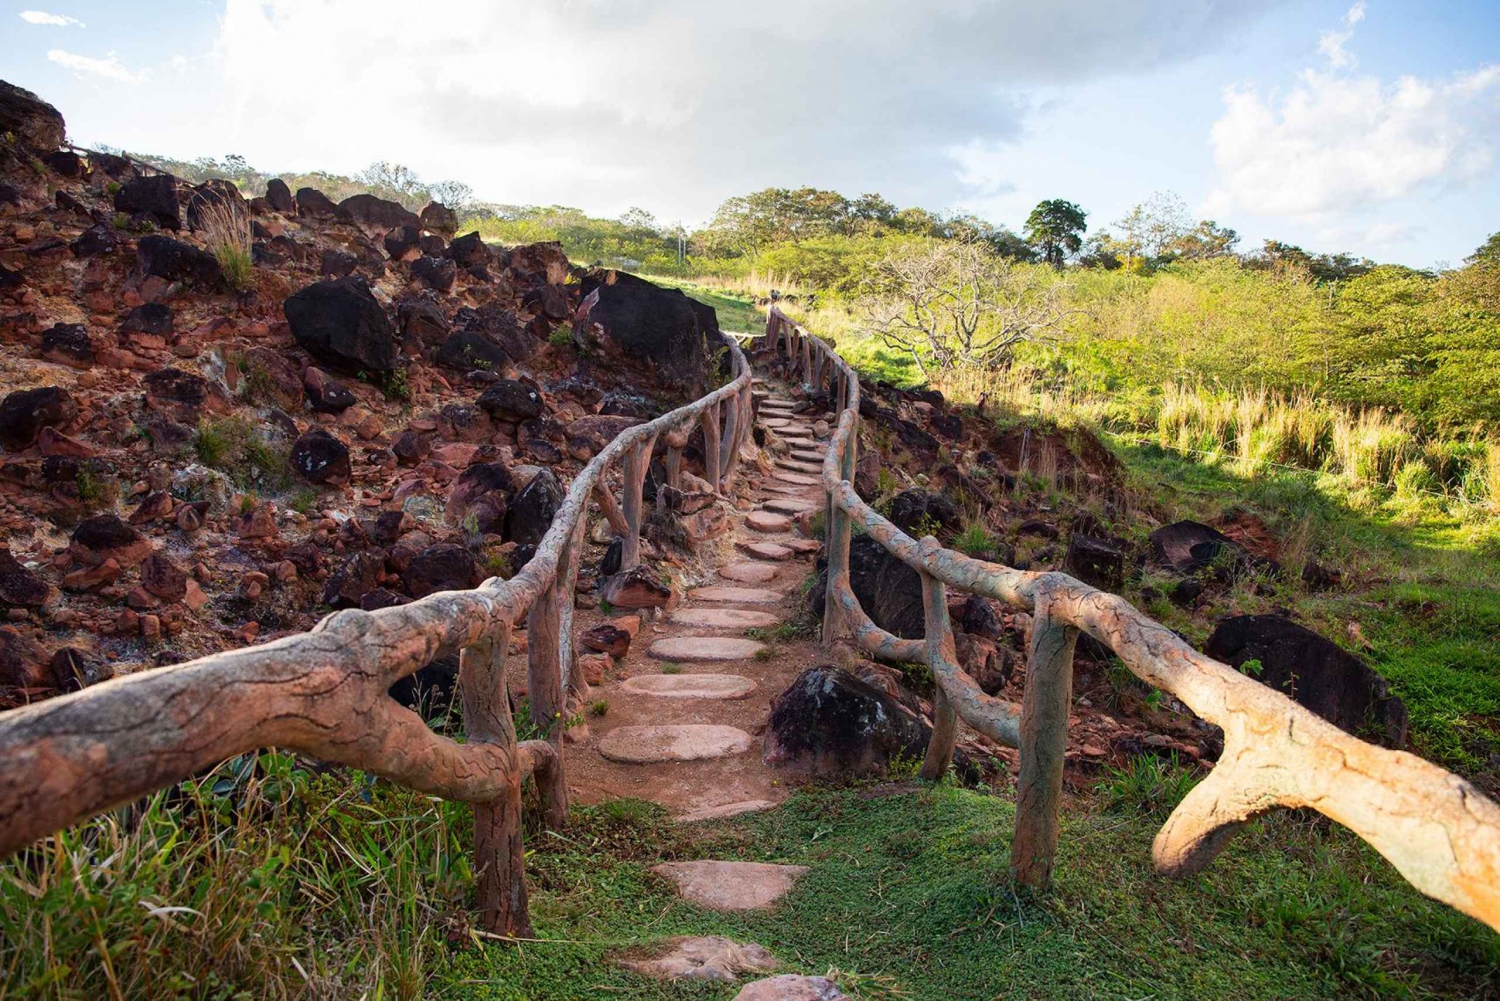 Vulkantour auch in Costa Rica all inclusive